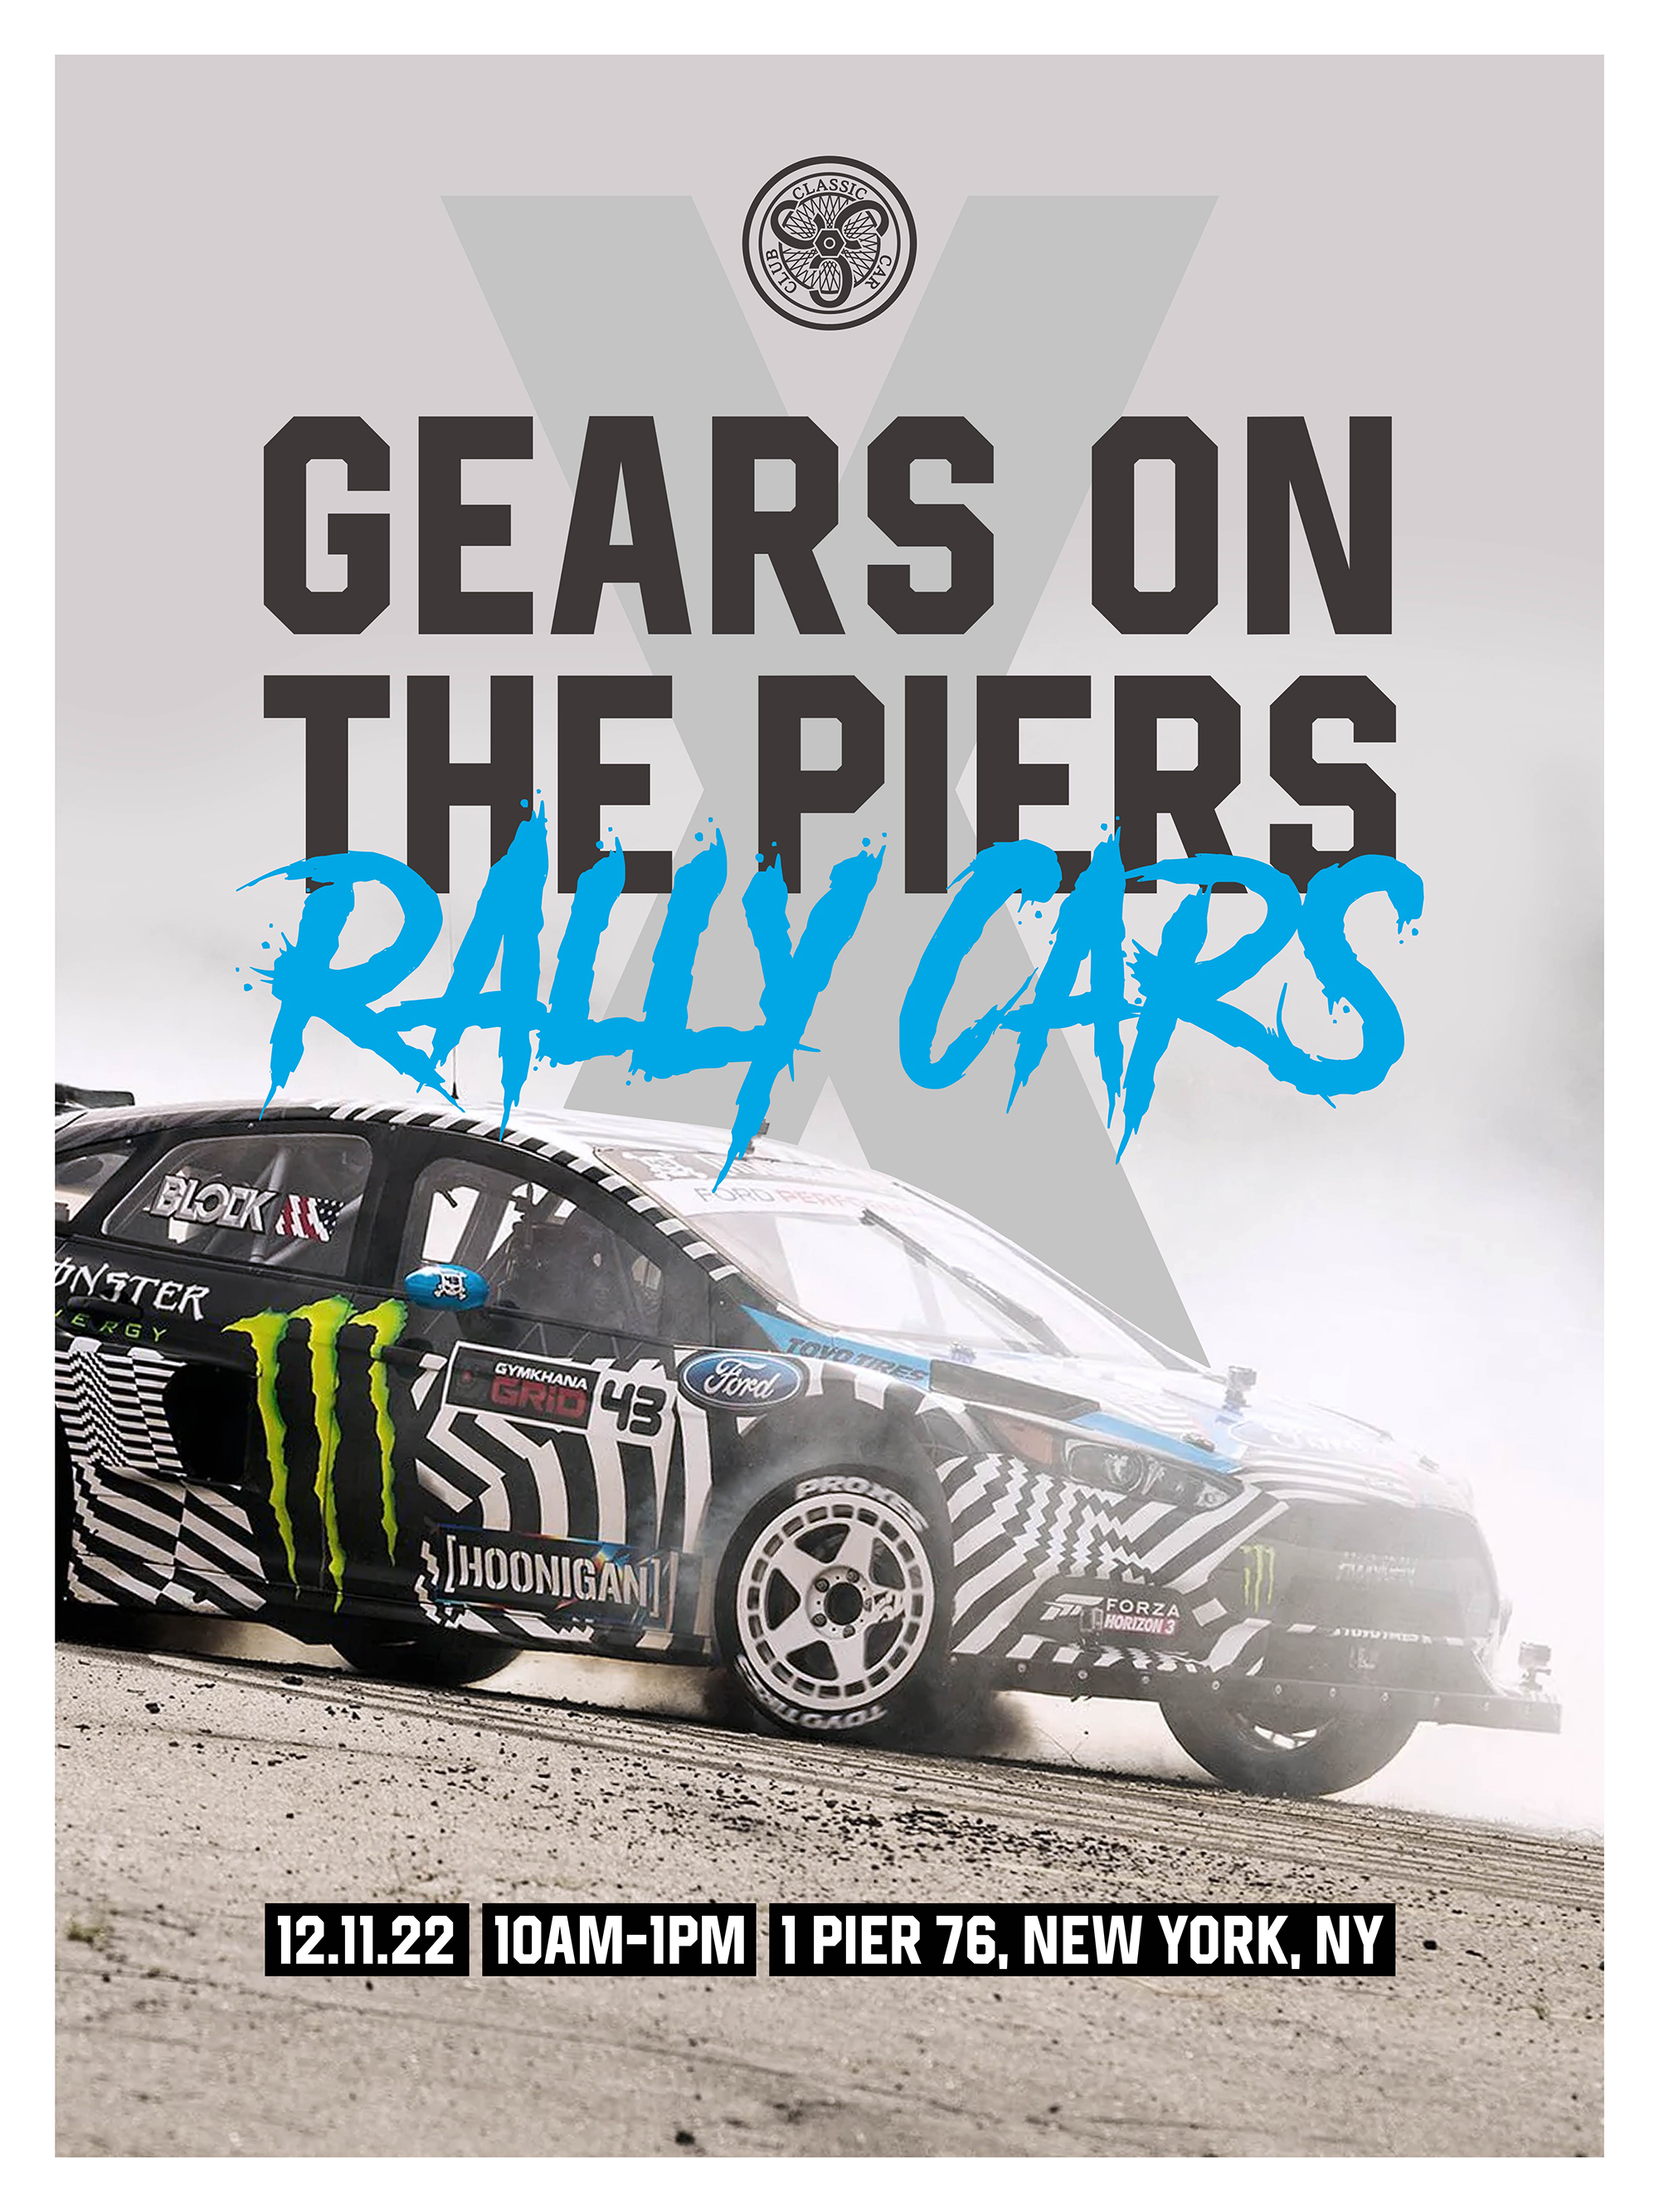 Gears on the Piers X: Rally Cars